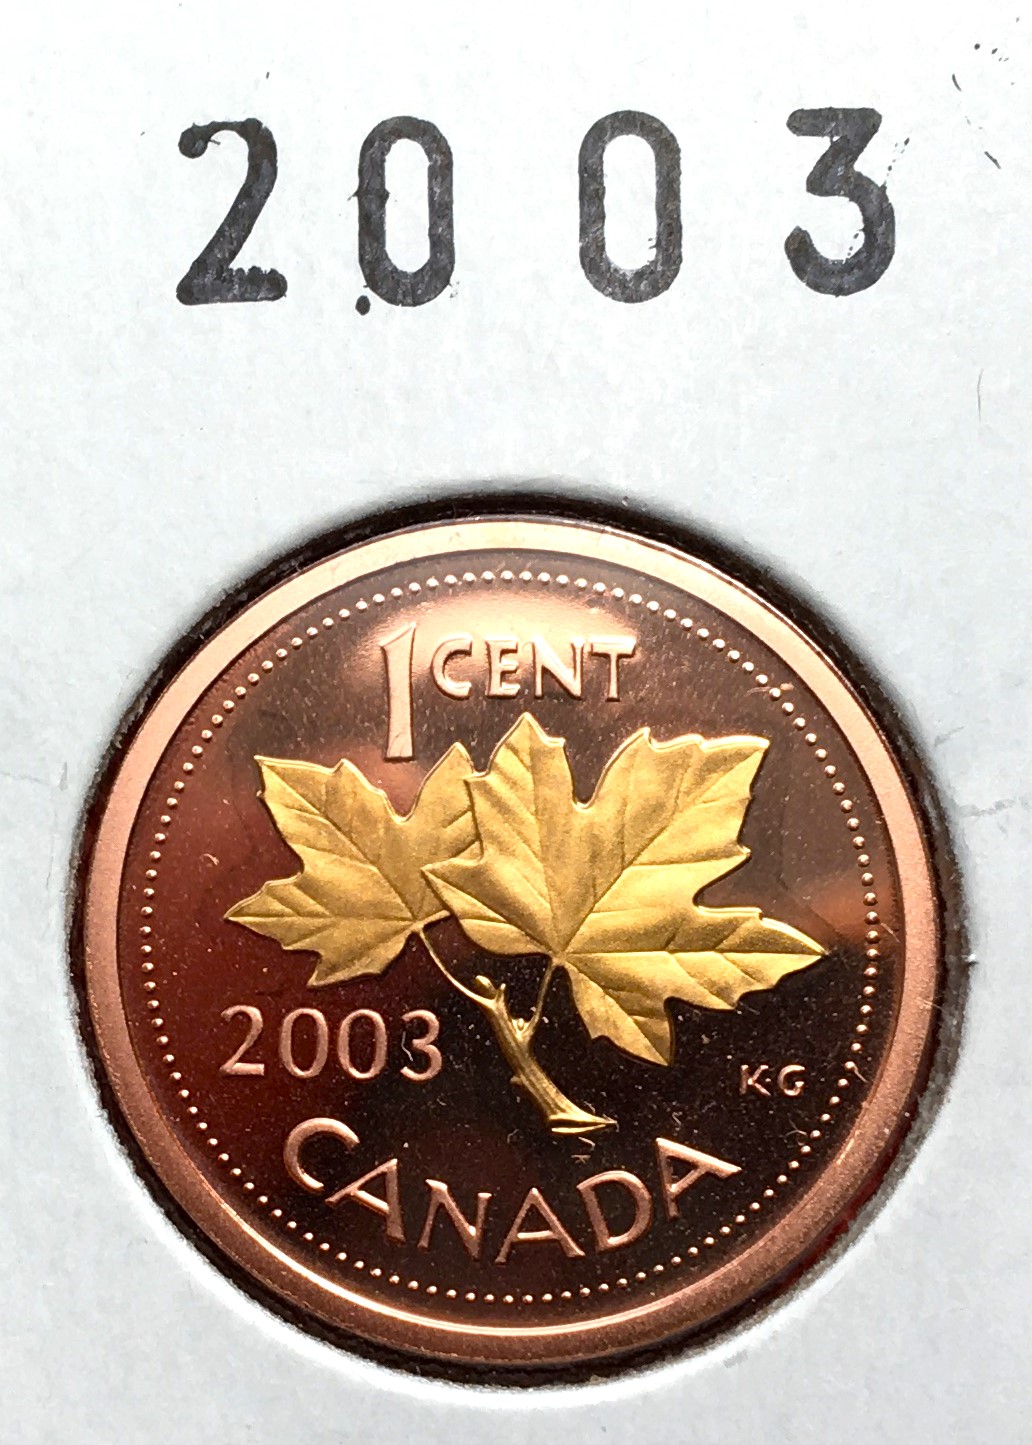 1 cent 2003 plaquée or.JPG